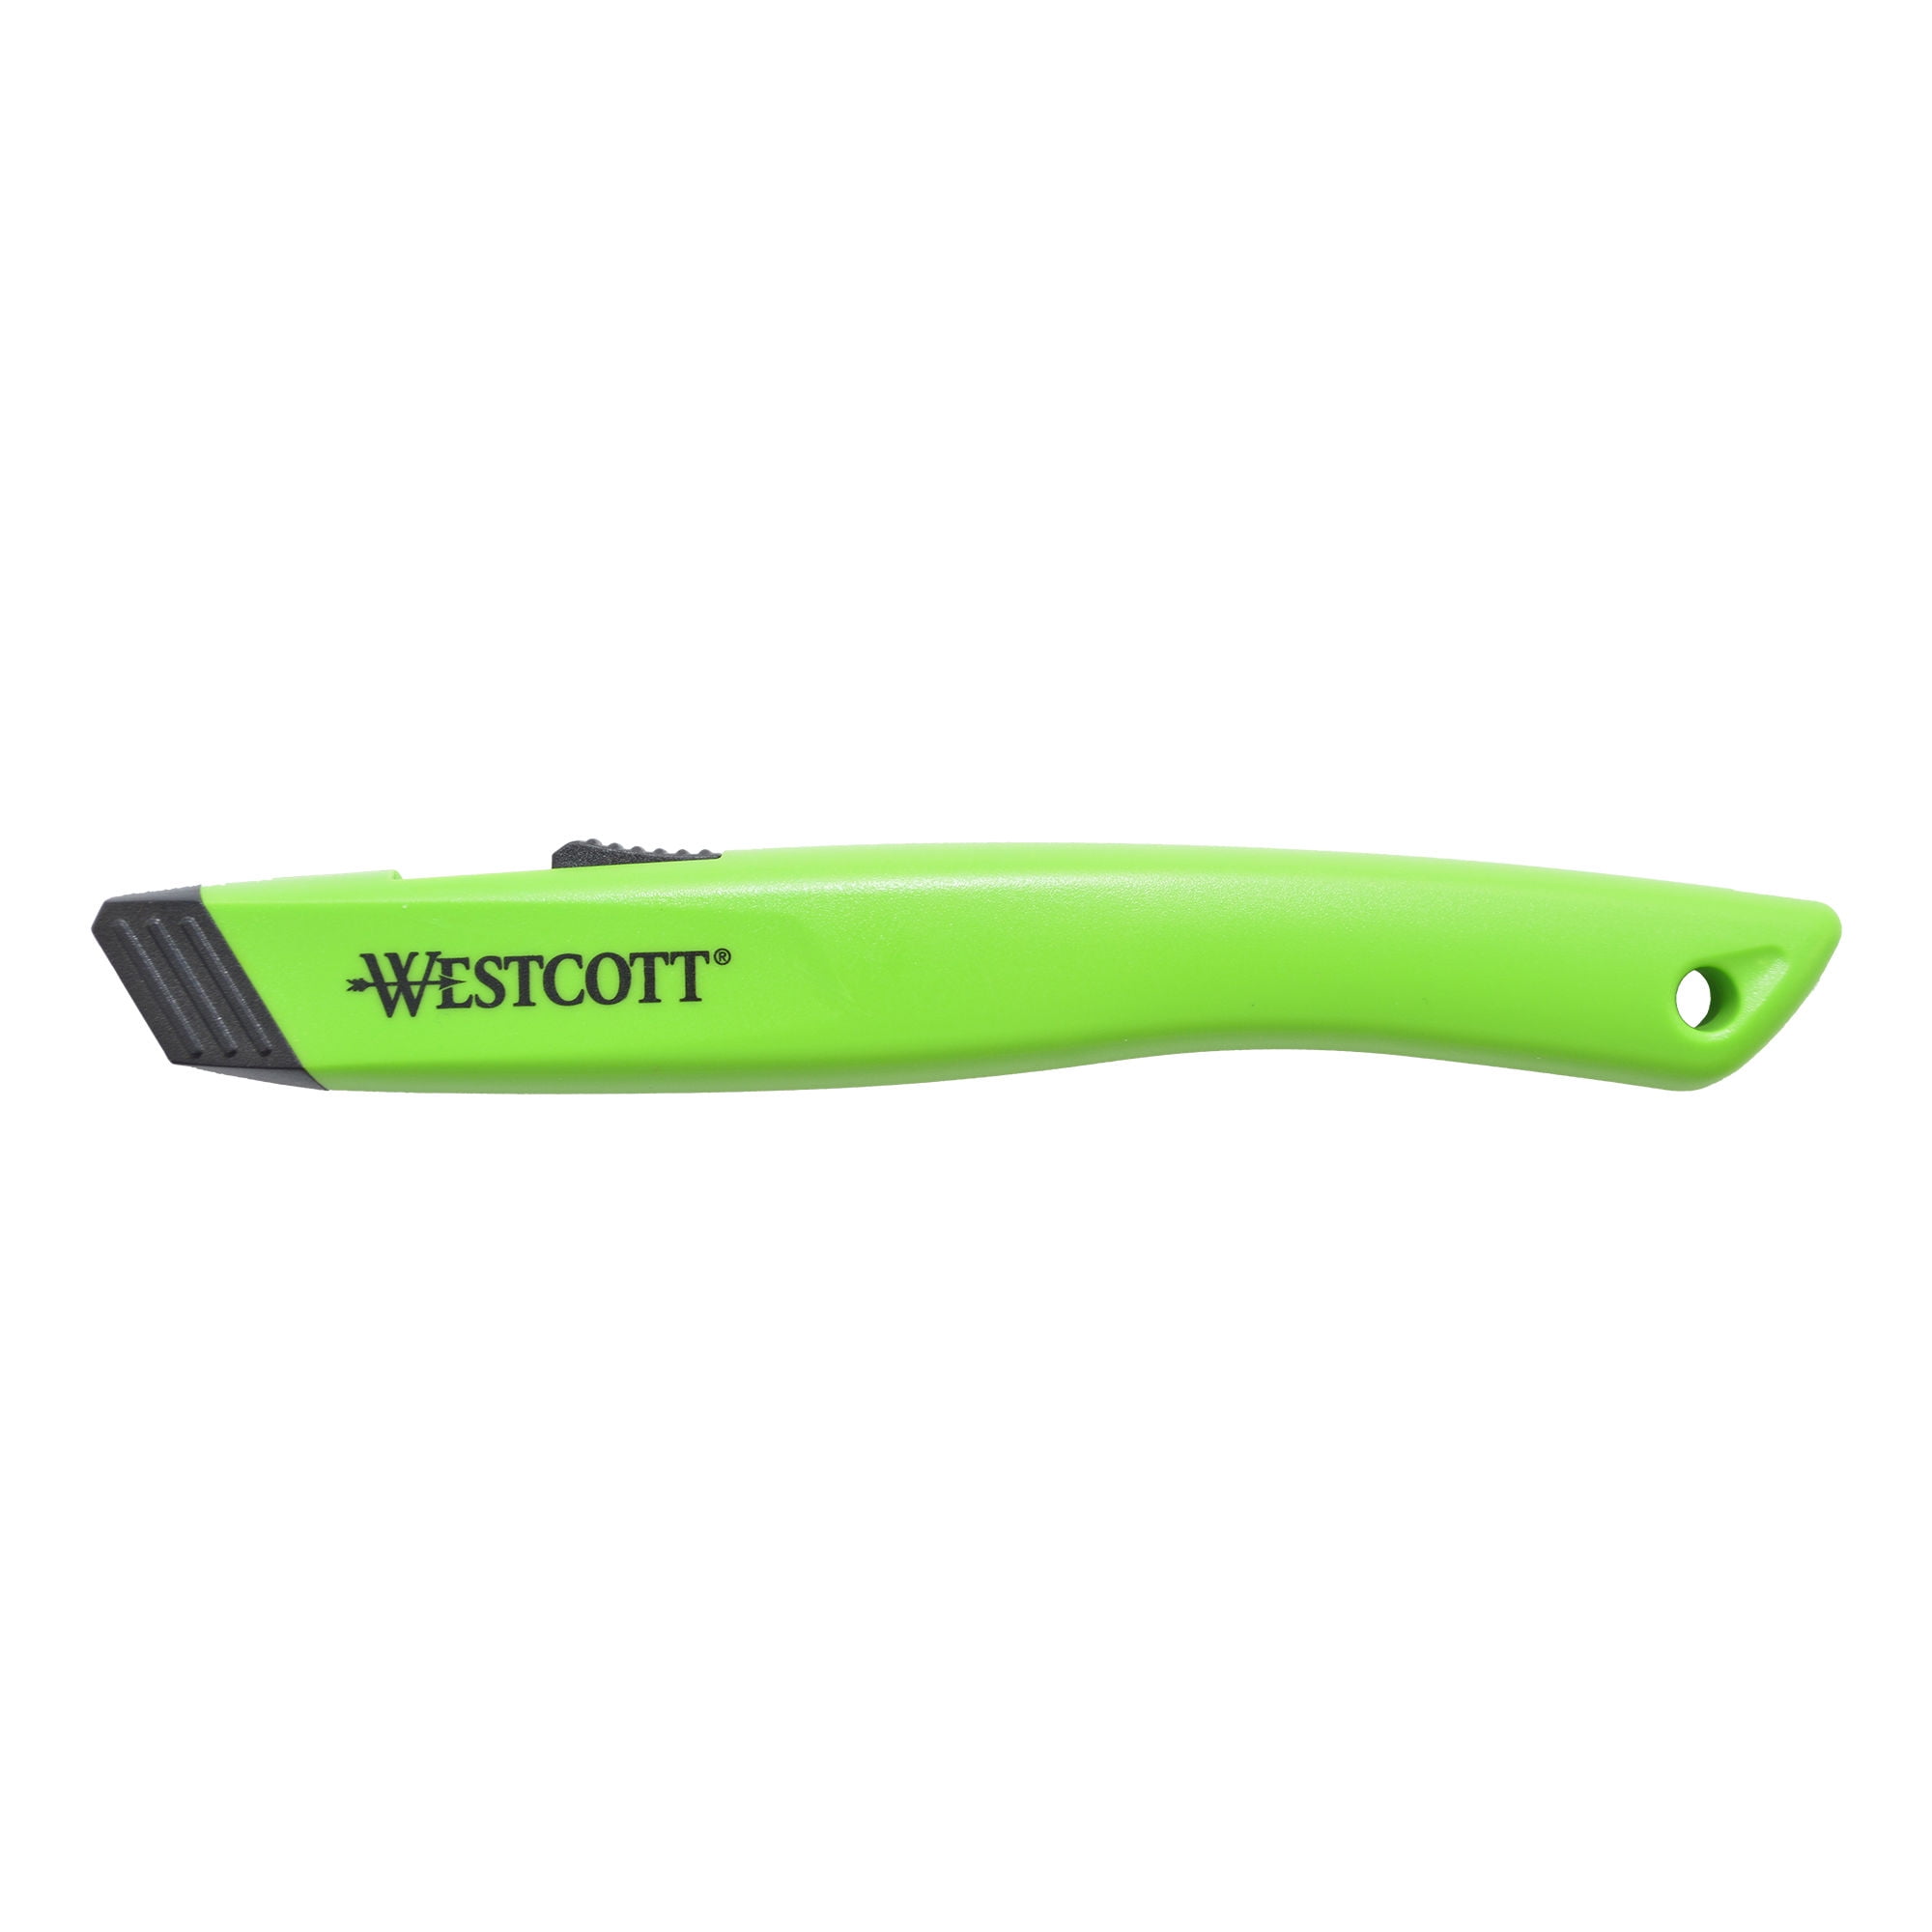 Westcott Full Size Retractable Ceramic Utility Box Cutter, Plastic, Green,  1-Count